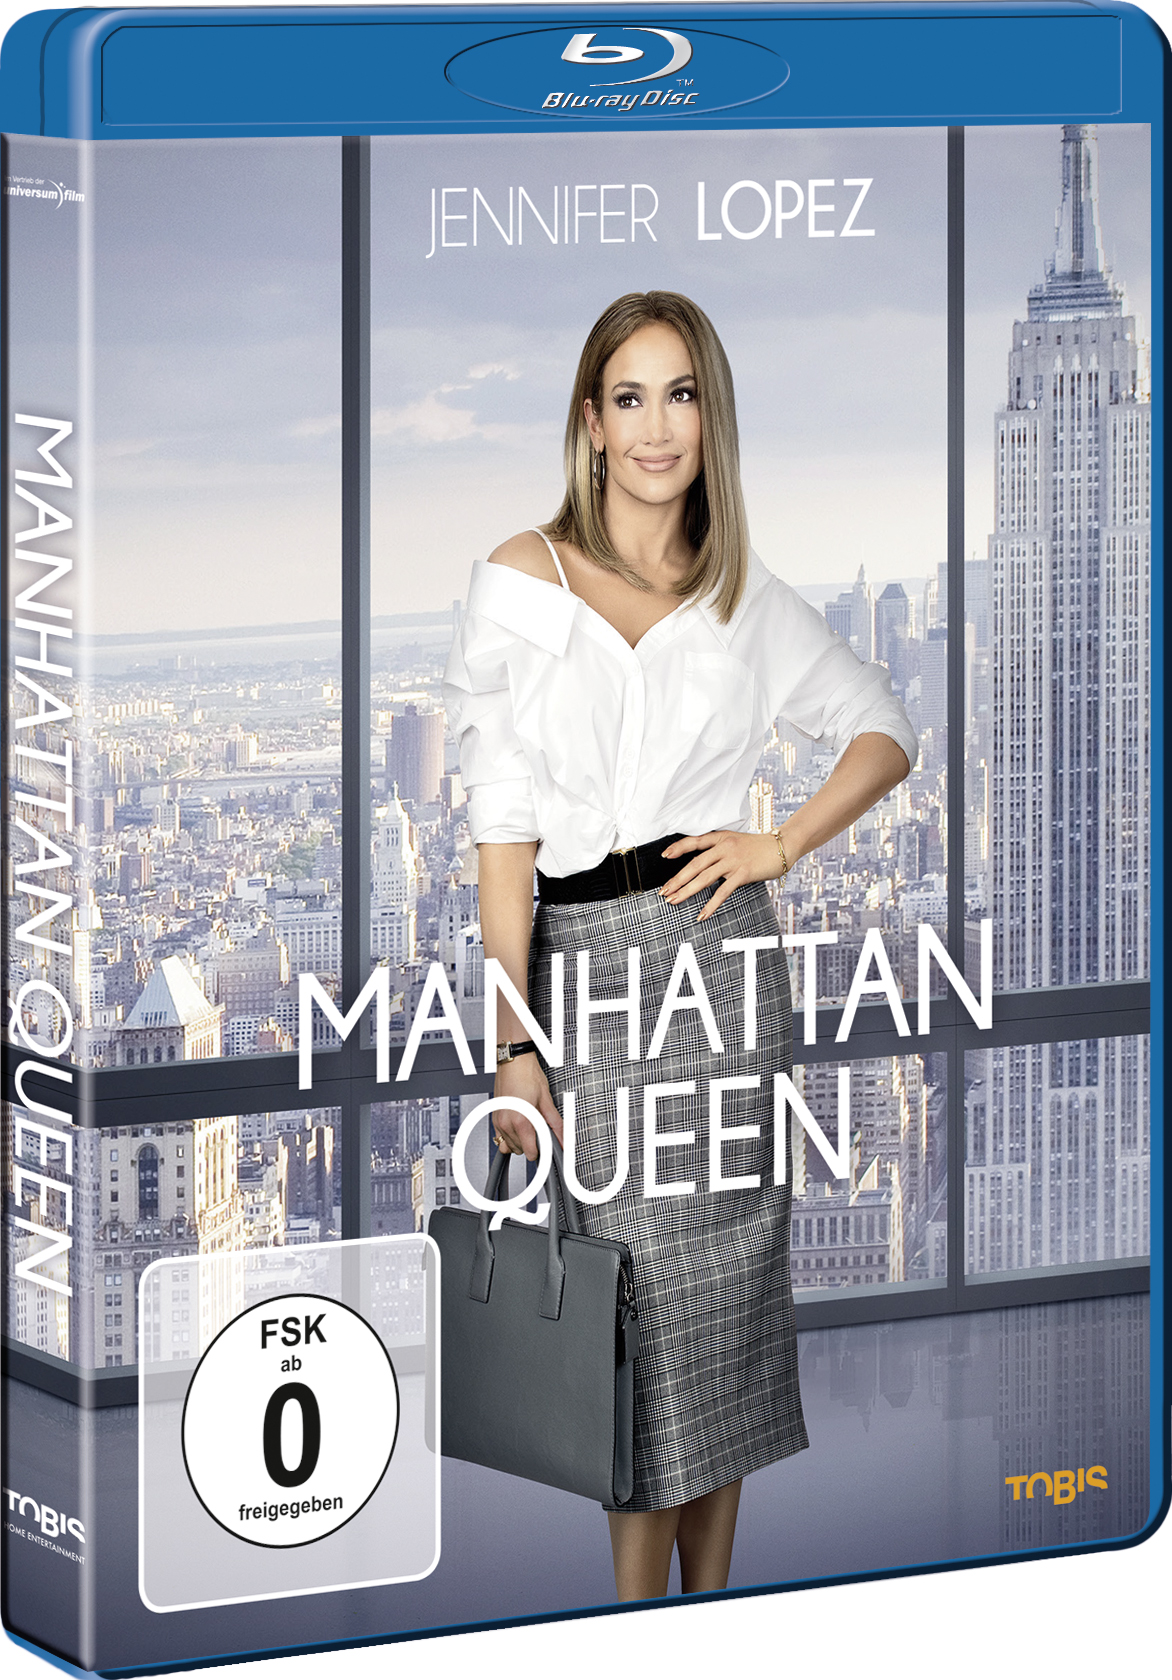 Manhatten Blu-ray Queen